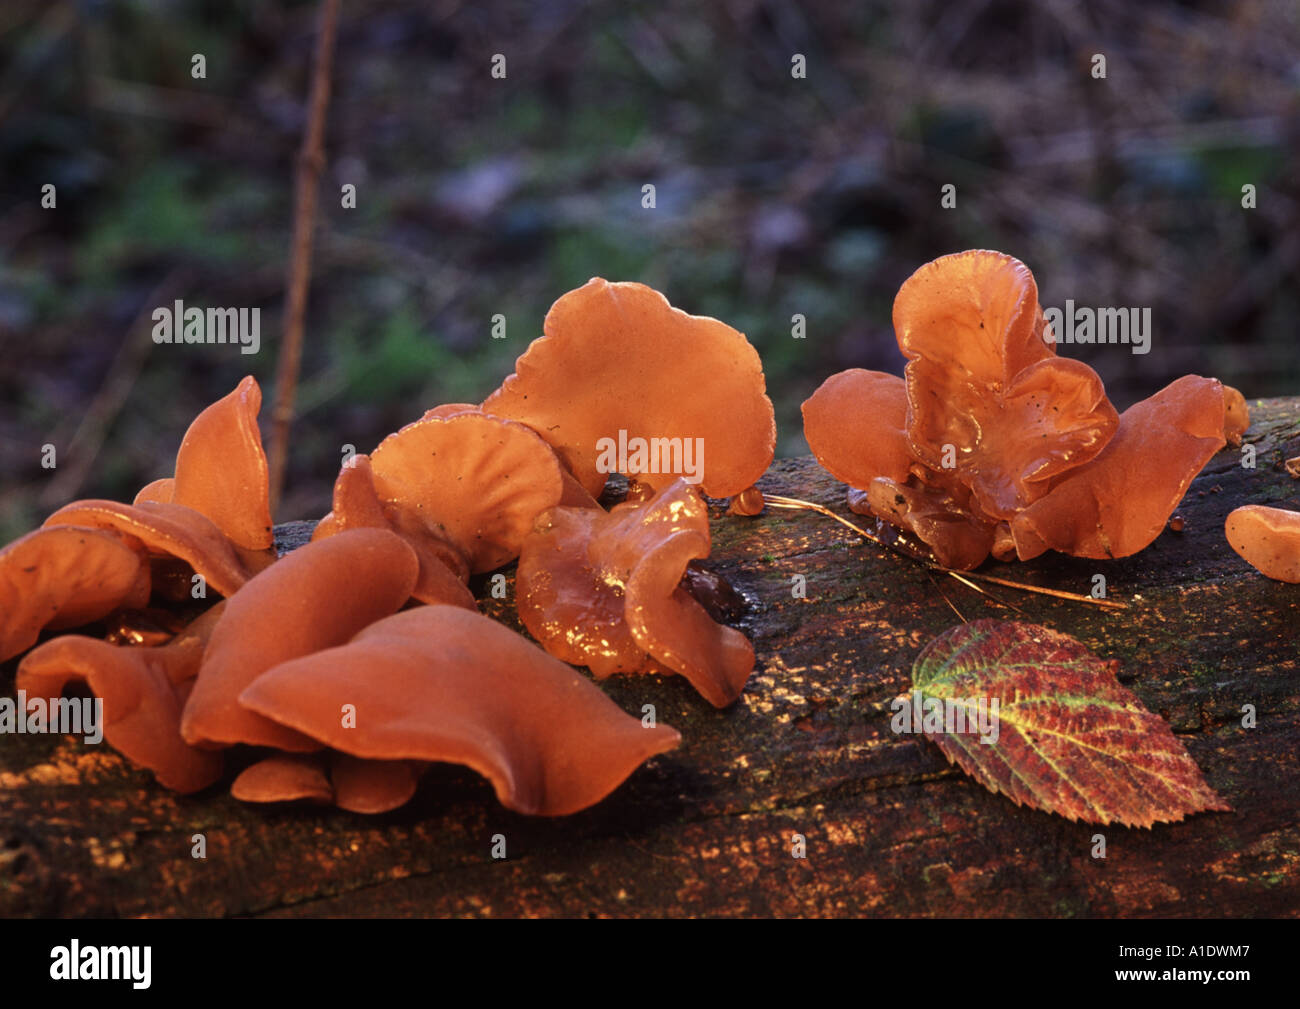 Jews Ear fungus on log in British woodland Stock Photo